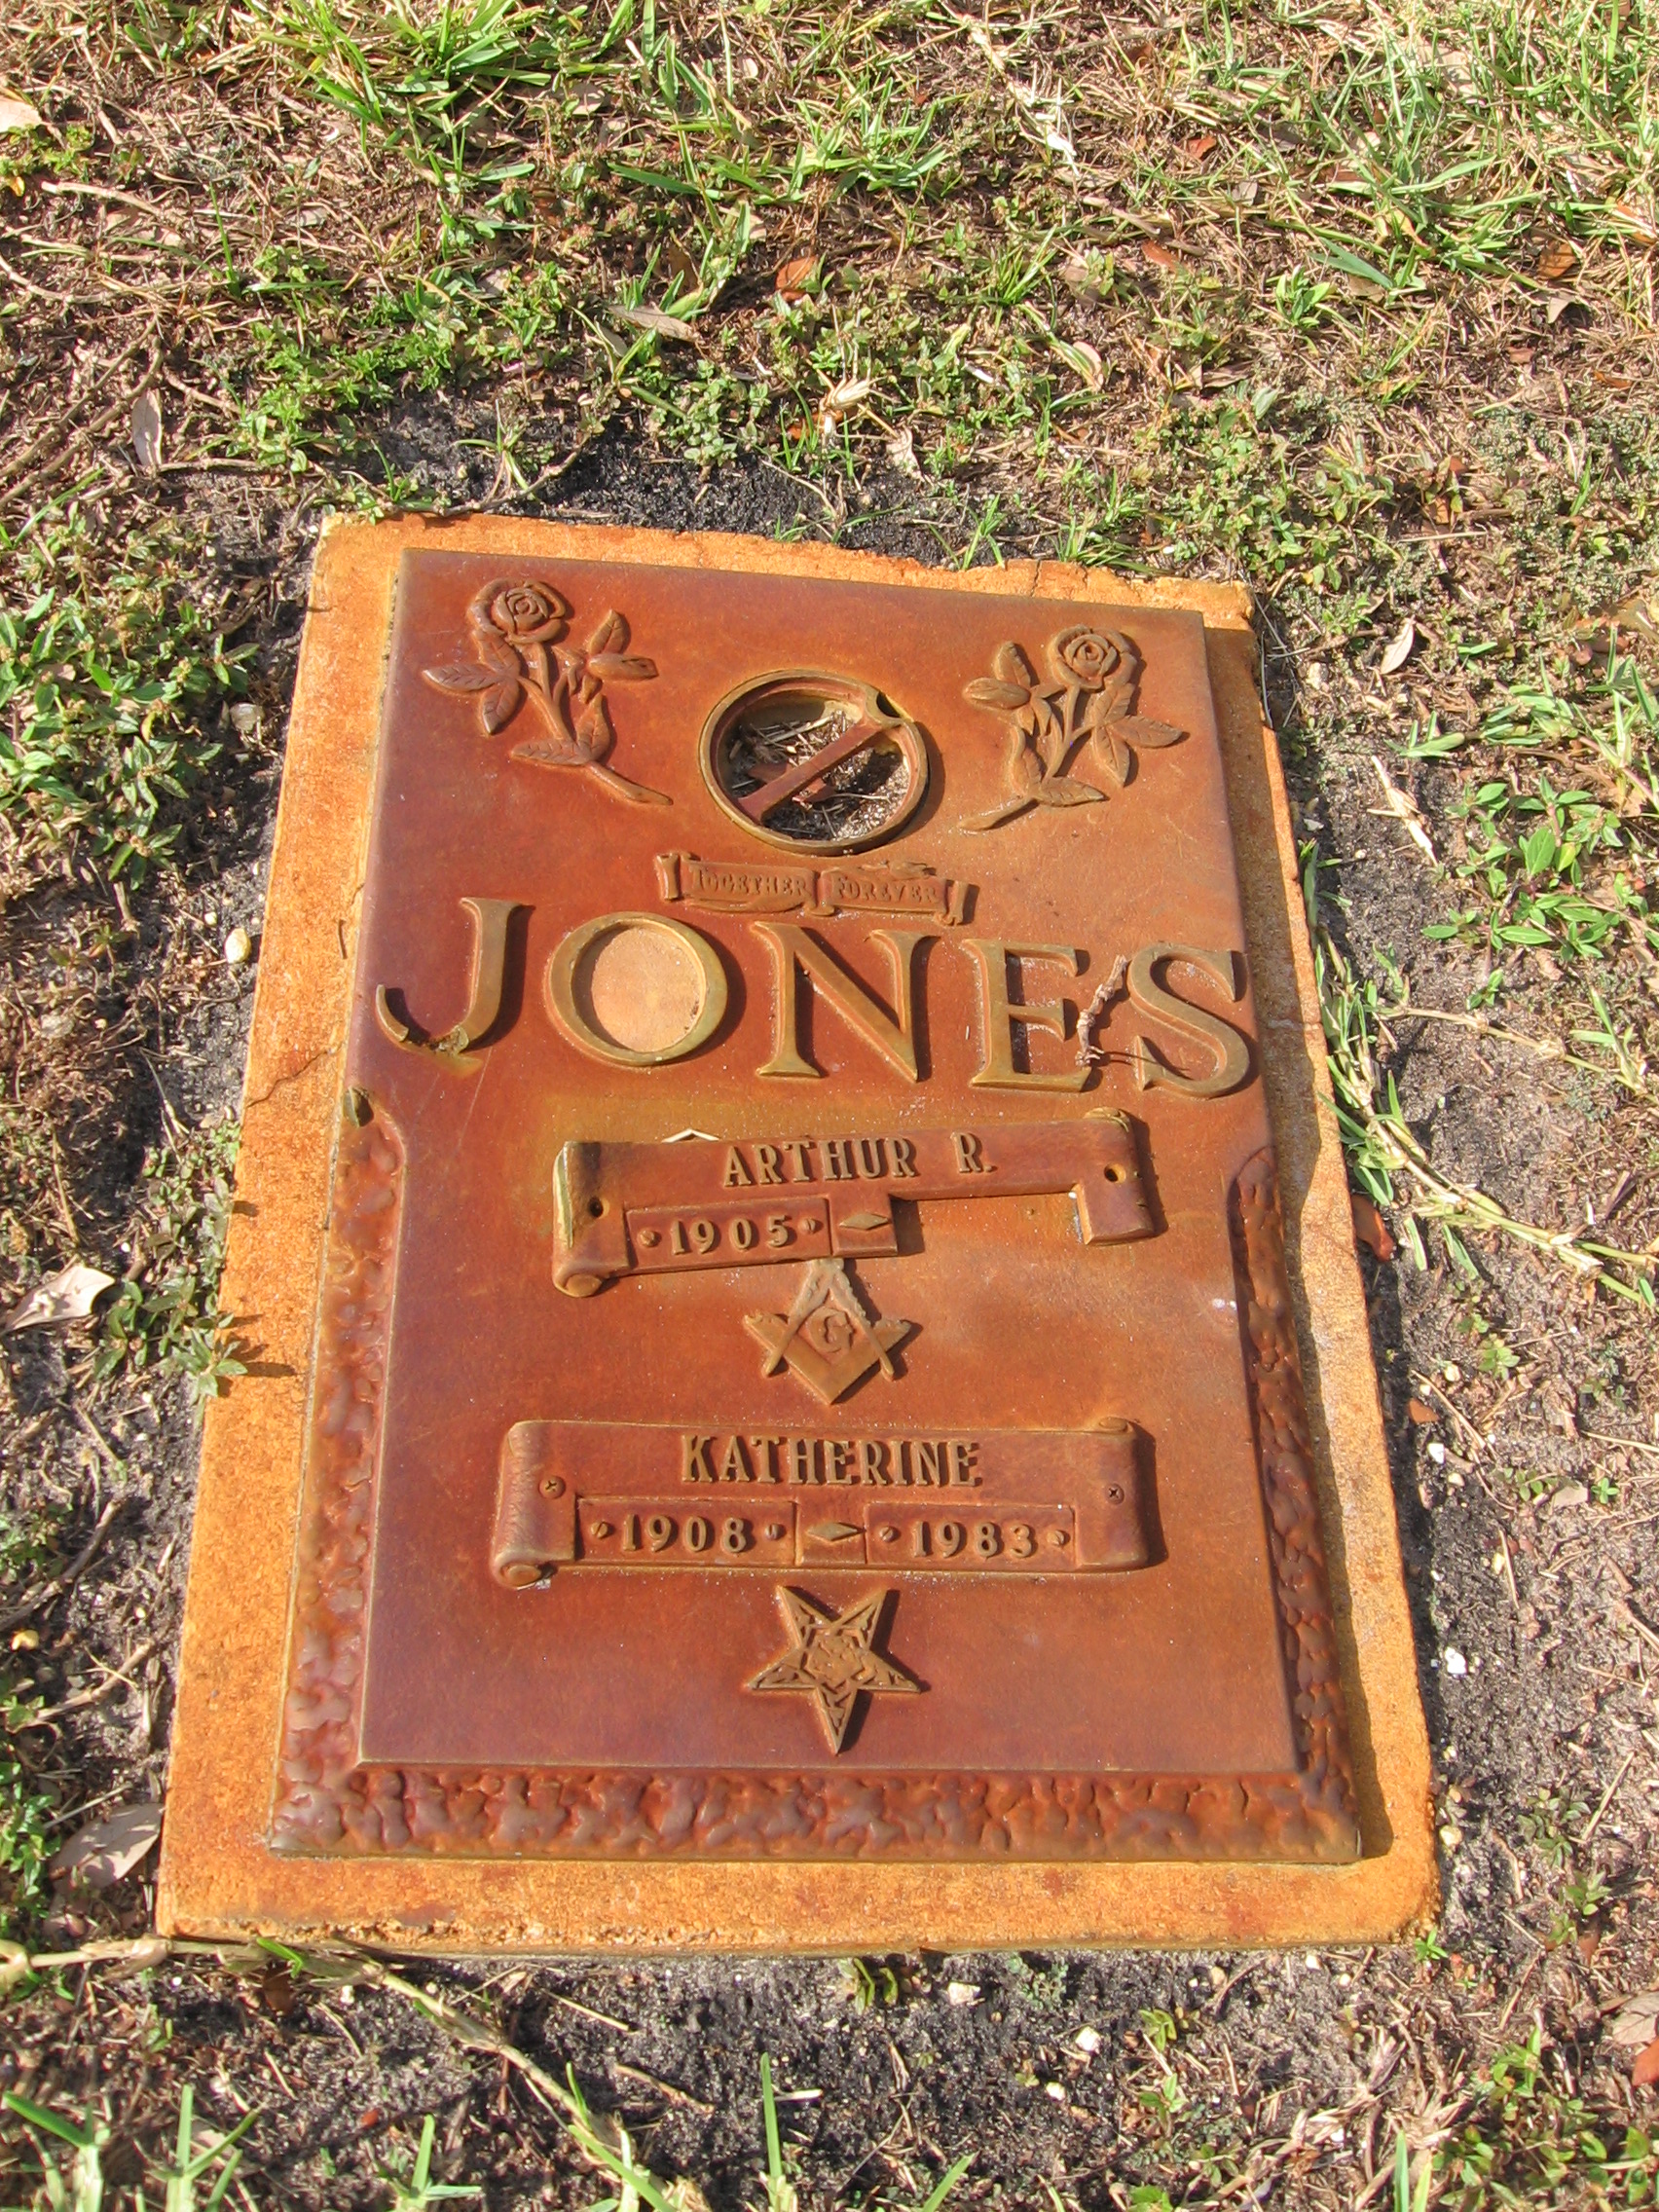 Arthur R Jones